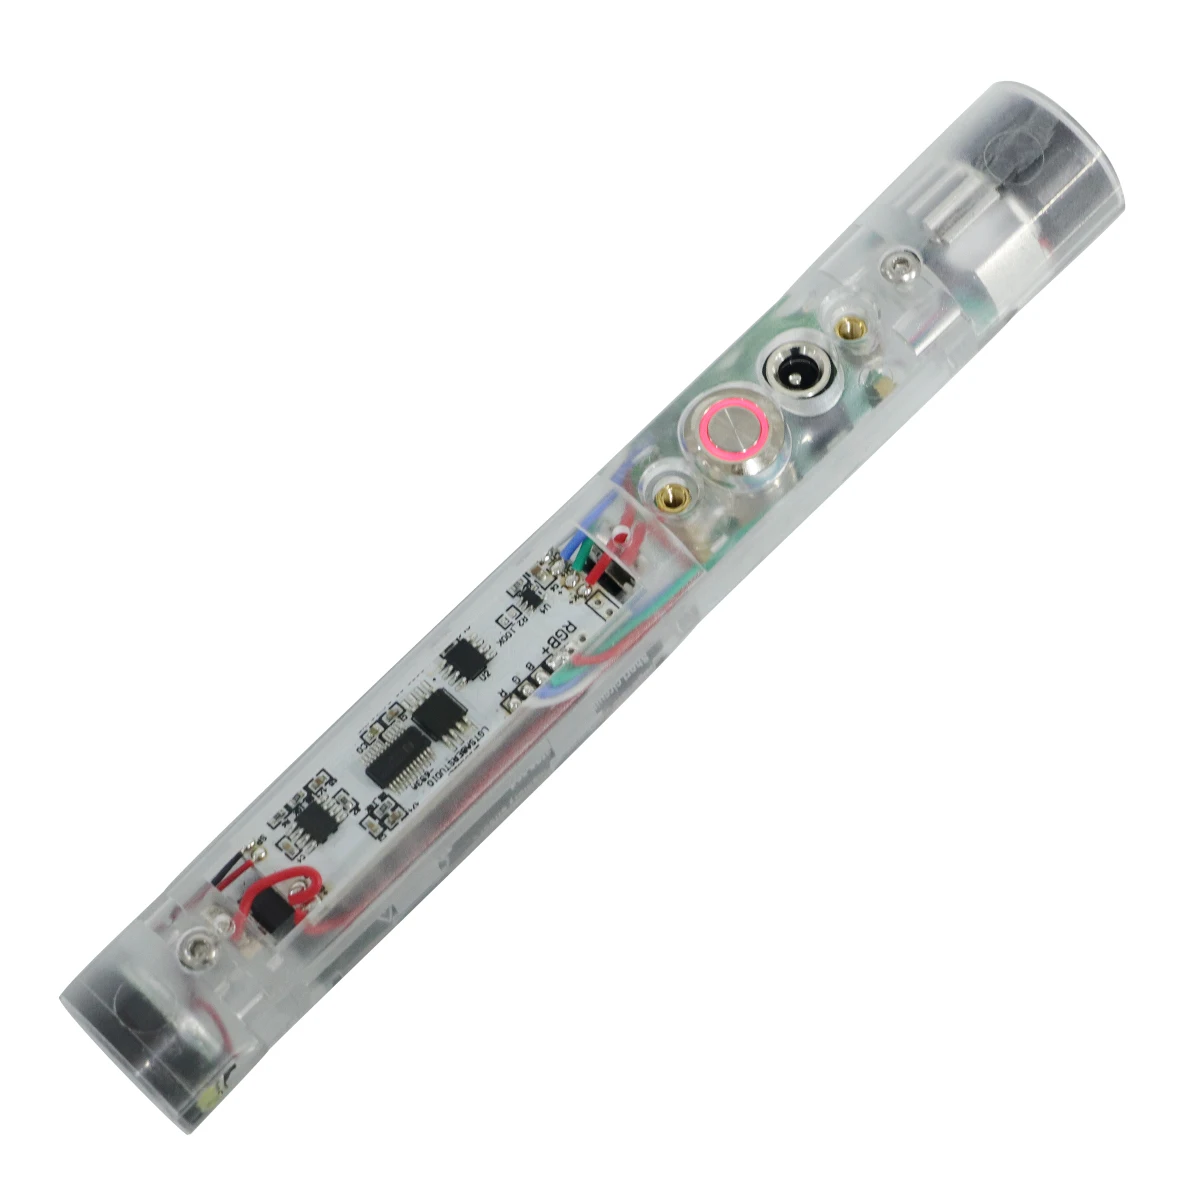 Lgt lightsaber-soundboard com cores infinitas, deslocamento suave,